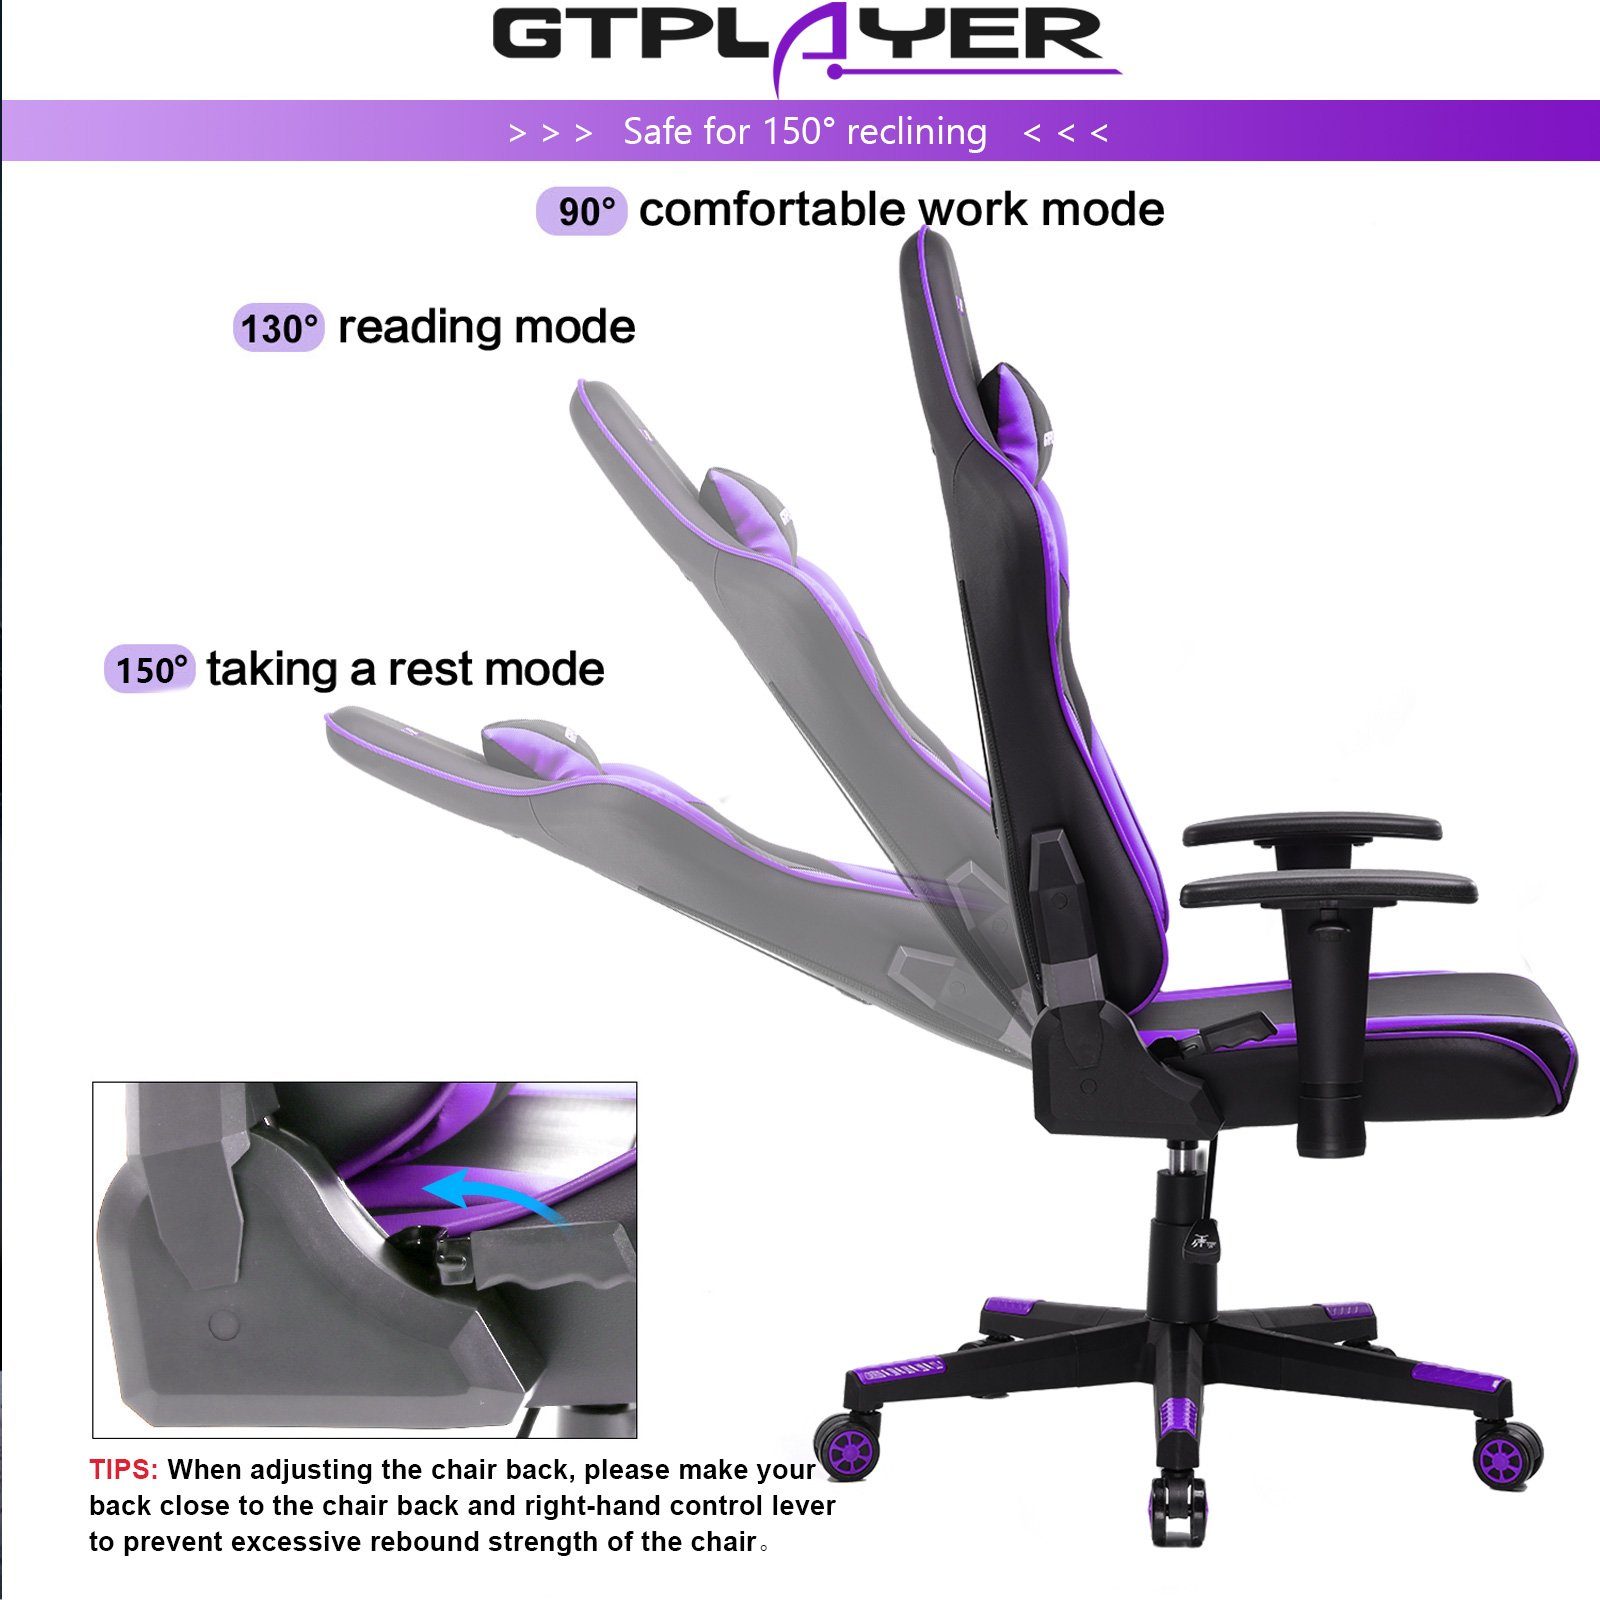 150 90°-165° Bürostuhl Stuhl, lila Gamer GTPLAYER Stuhl Gaming-Stuhl Neigungswinkel ergonomischer bis kg Gaming Sessel belastbar, Gaming